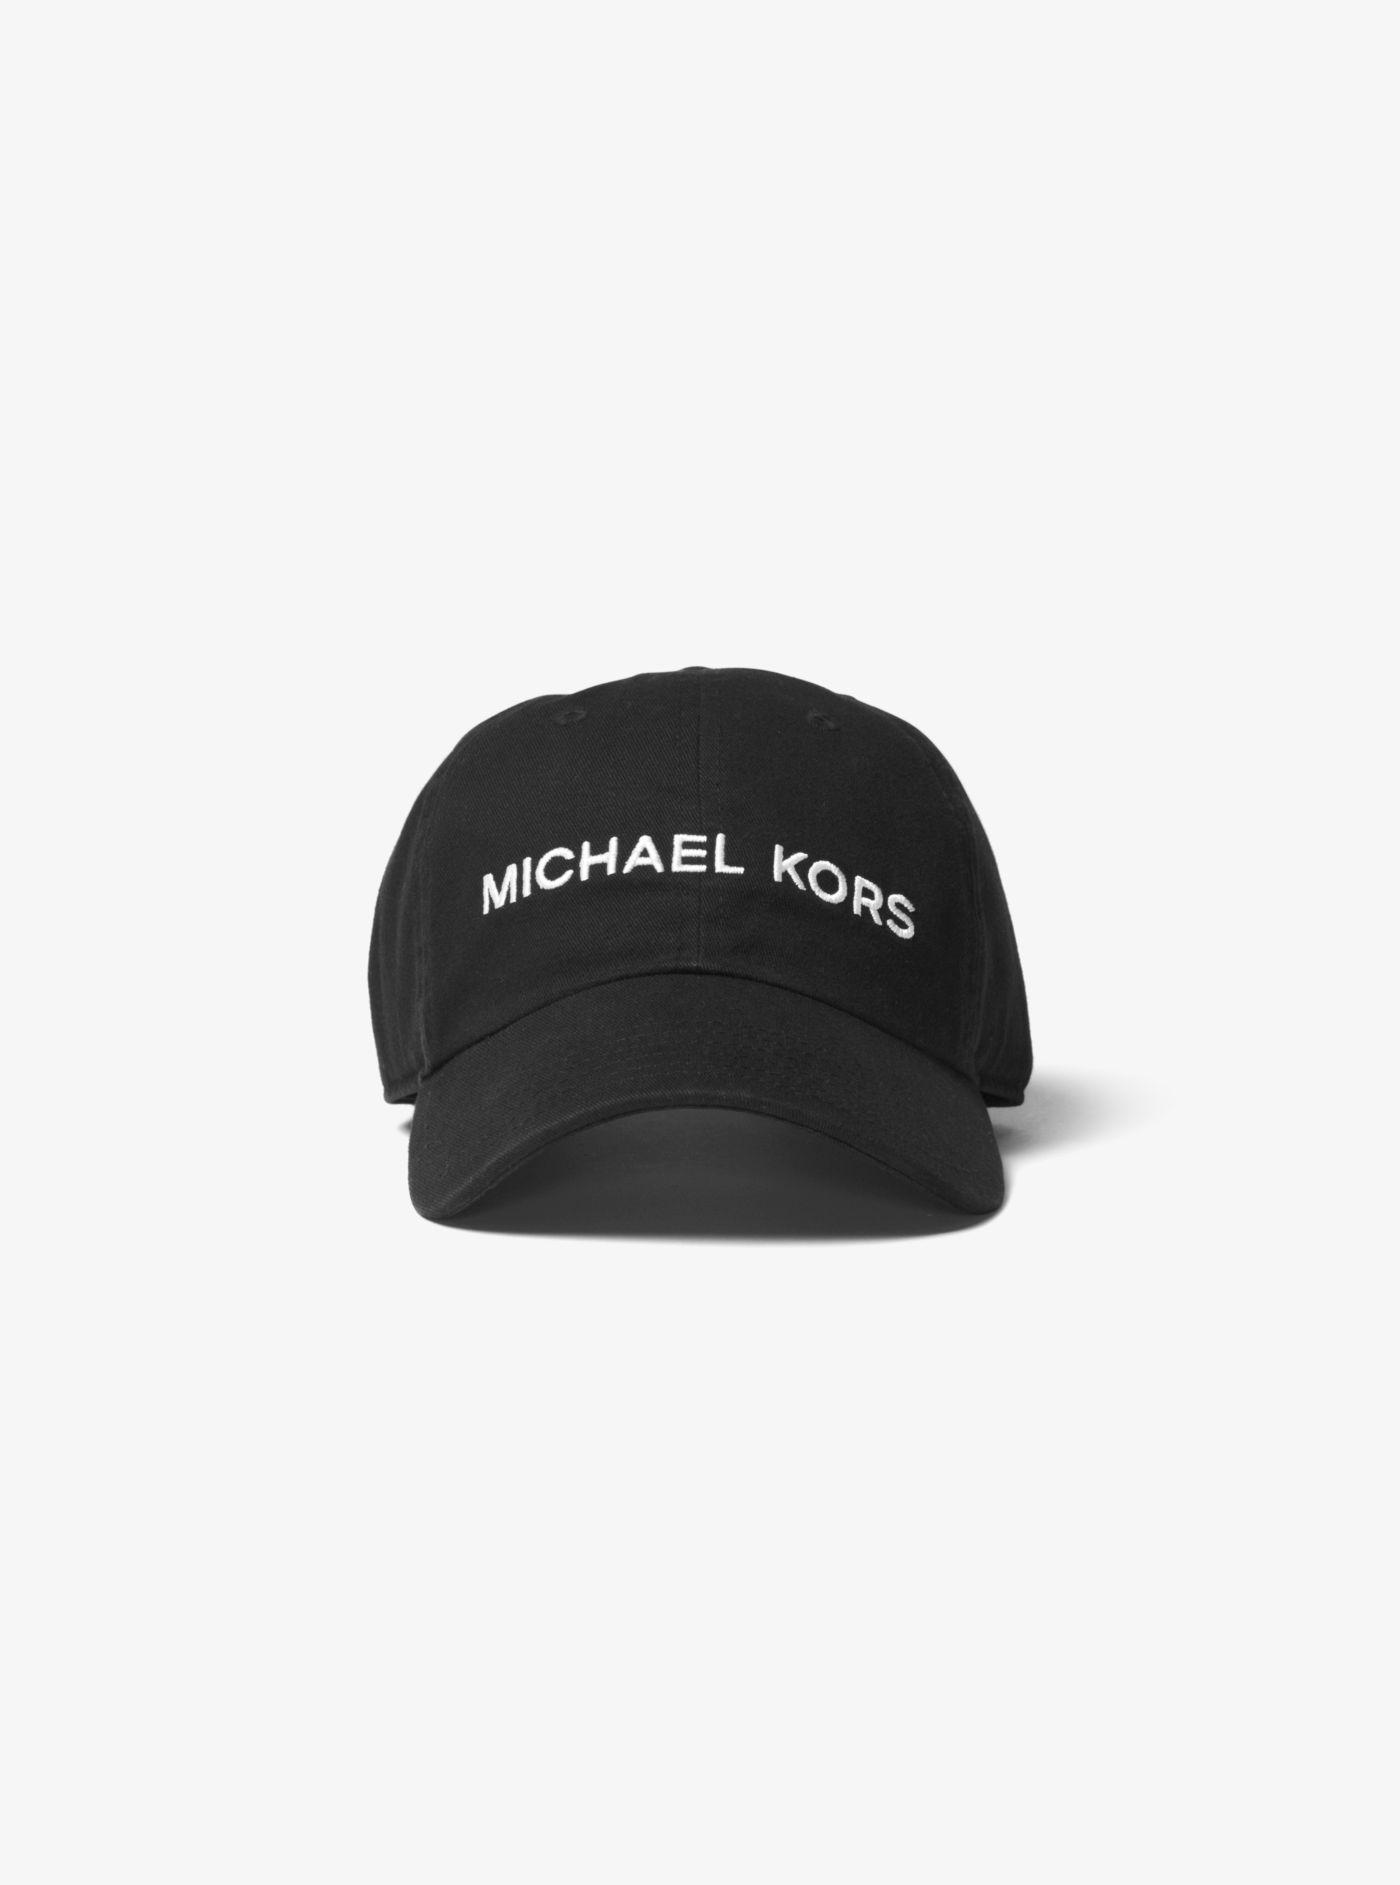 Michael Kors Cotton Mens Plain Black Adjustable Baseball Cap for Men - Lyst